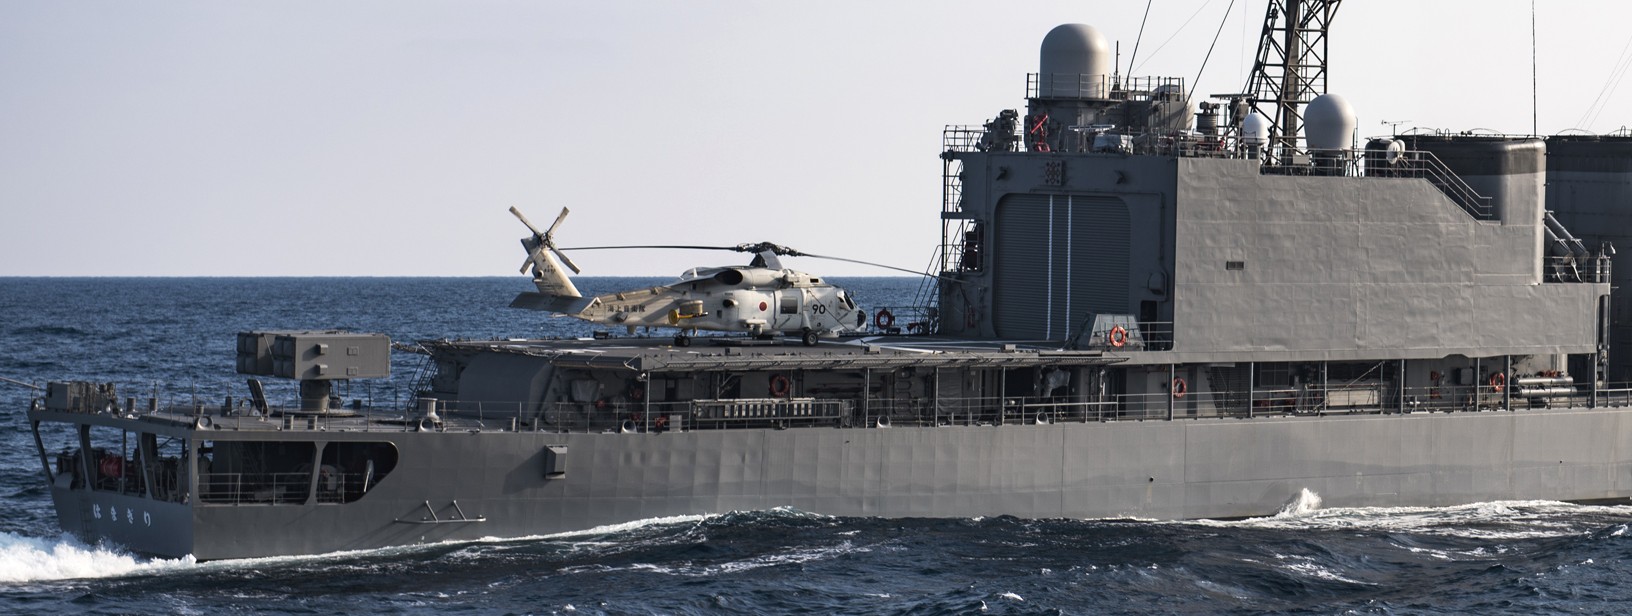 asagiri class destroyer japan maritime self defense force jmsdf flight deck hangar sh-60 seahawk helicopter 10